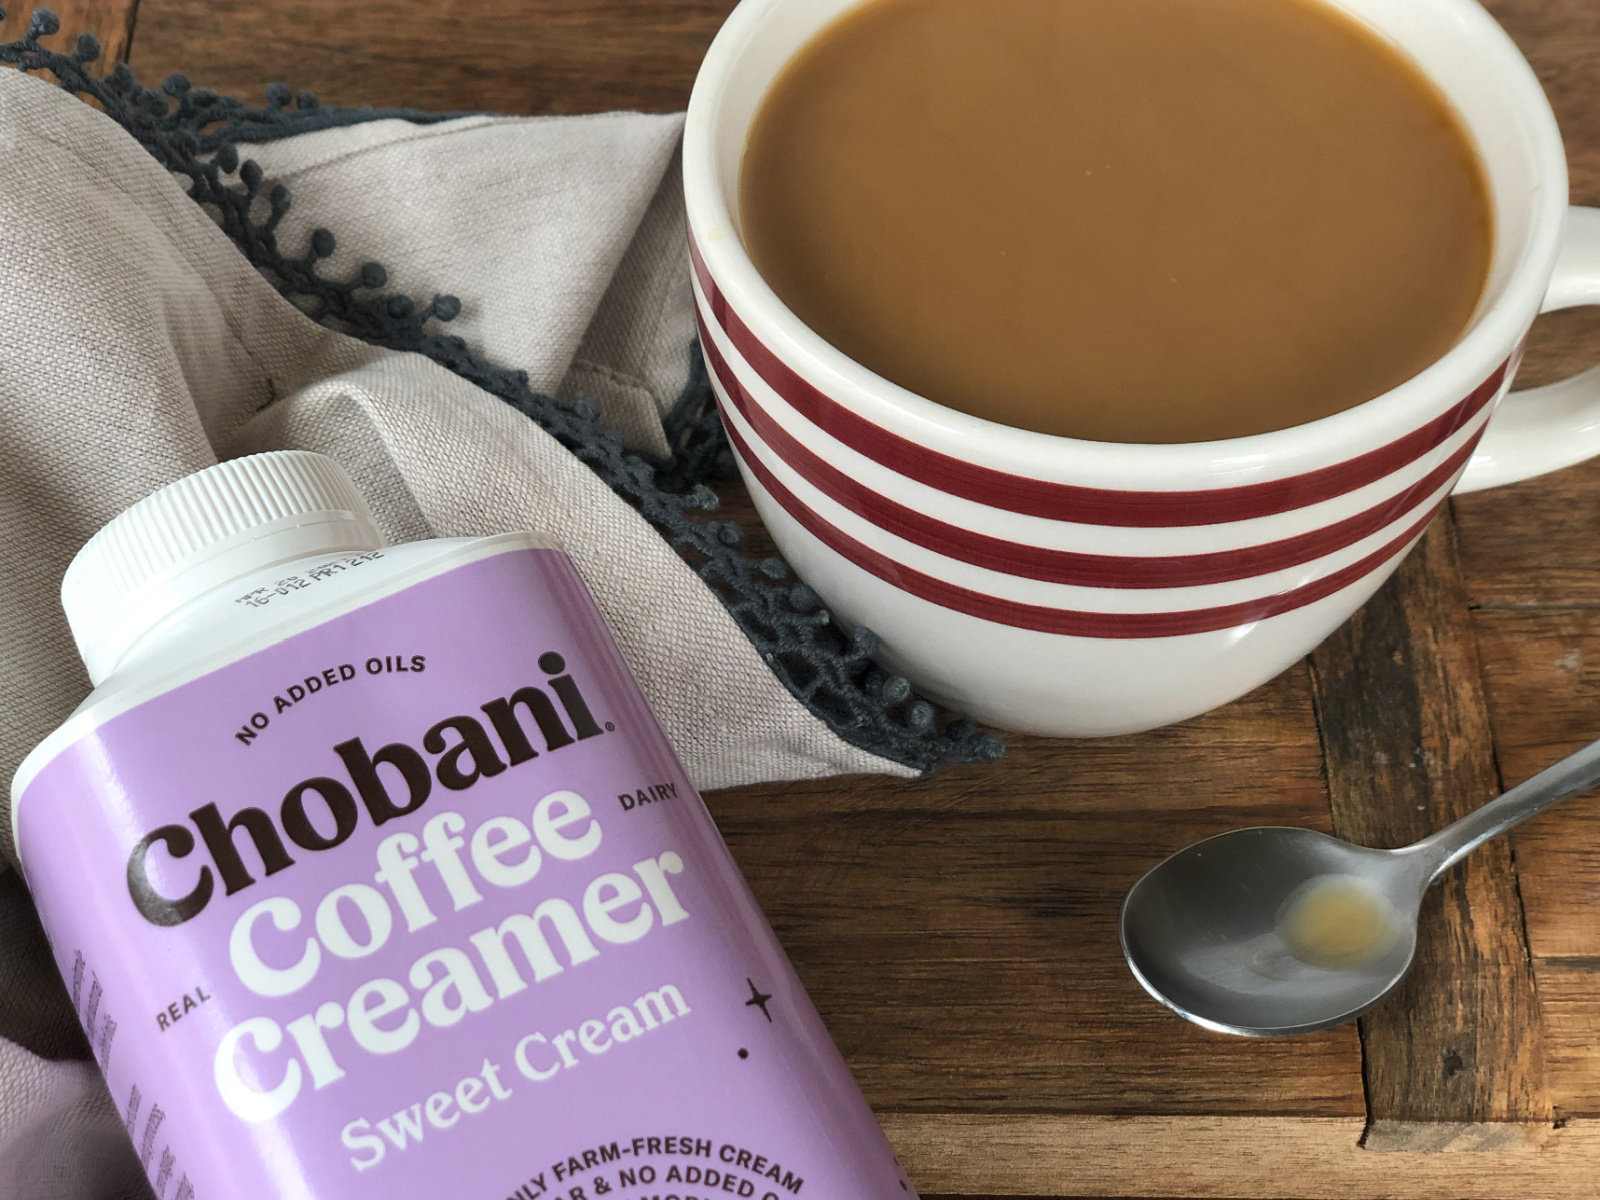 Chobani Coffee Creamer As Low As $2.20 At Publix